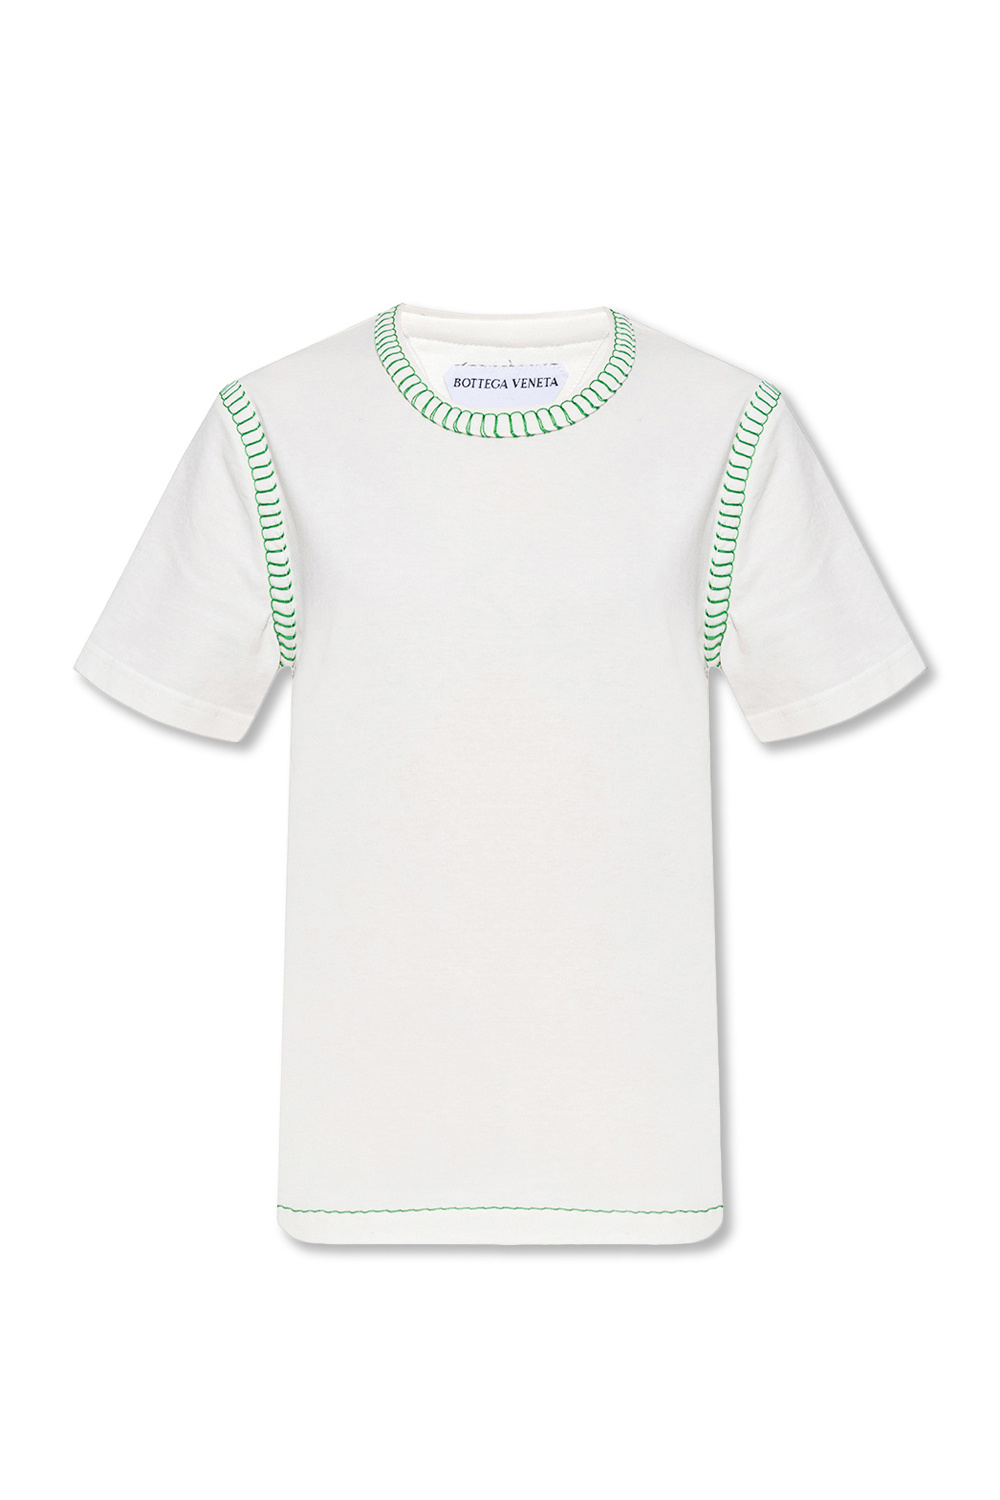 Bottega Veneta T-shirt with decorative stitching | Women's 